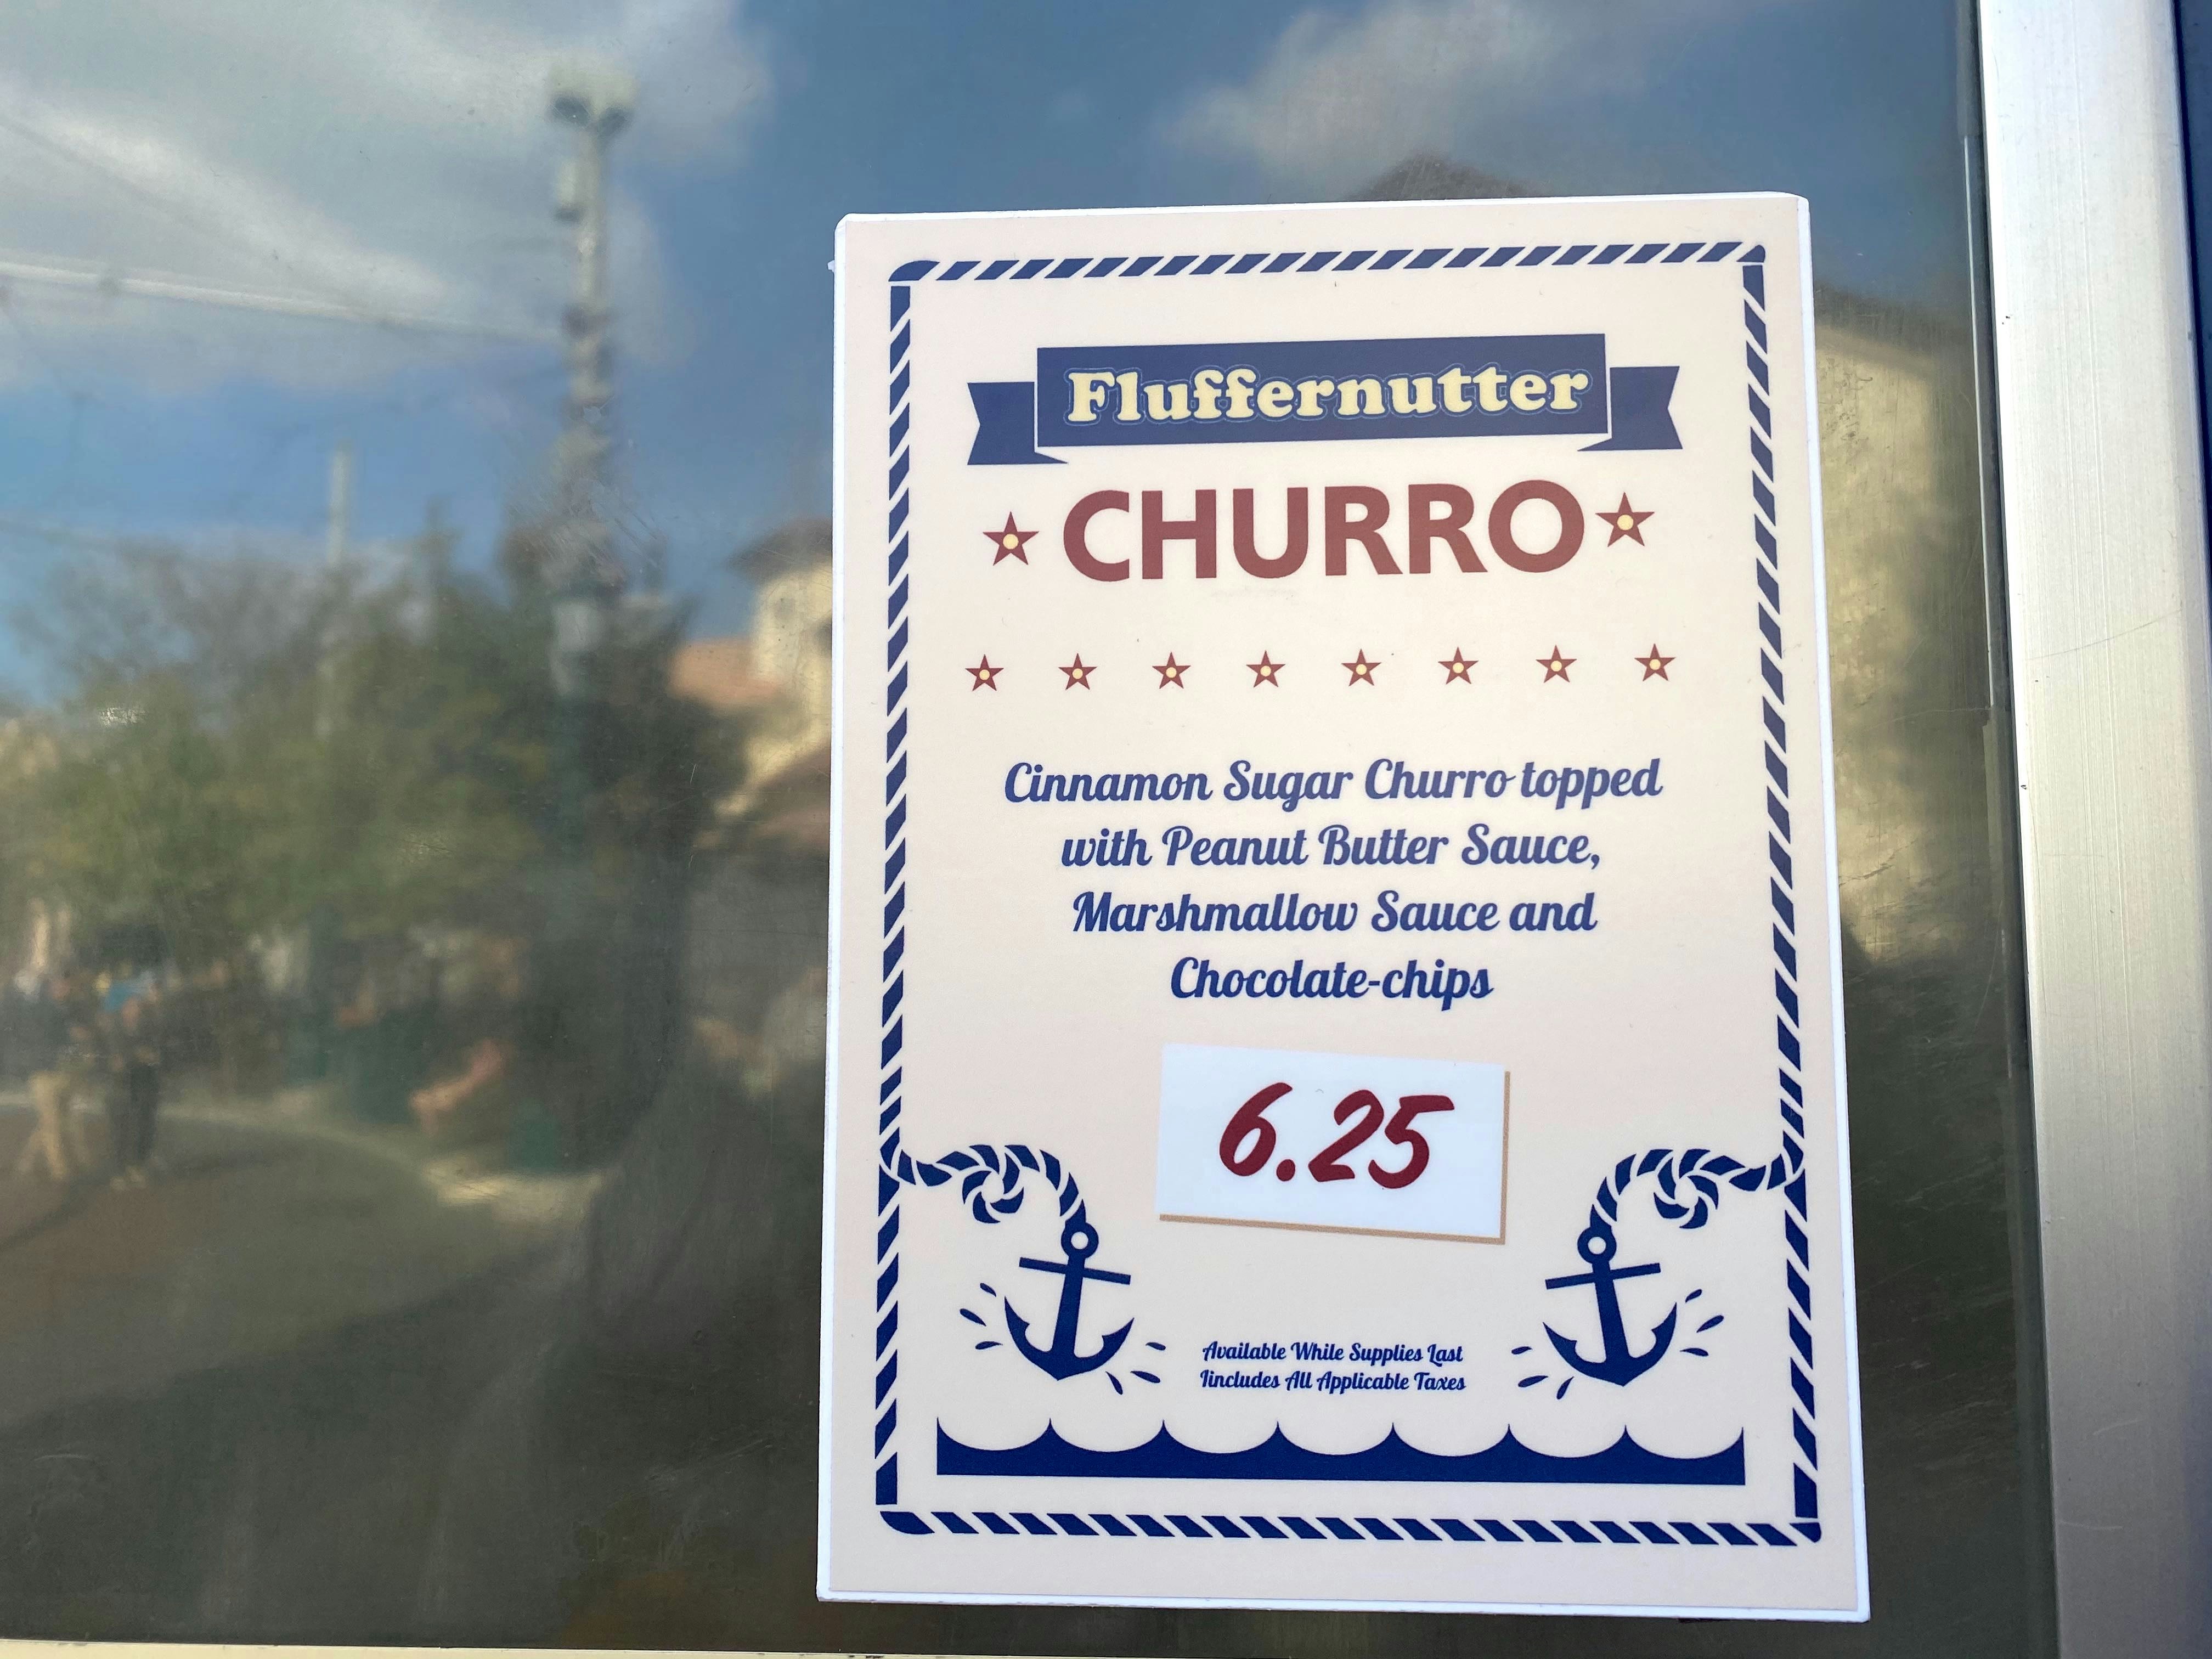 fluffernutter churro dca jan 2020 3.jpg?auto=compress%2Cformat&ixlib=php 1.2